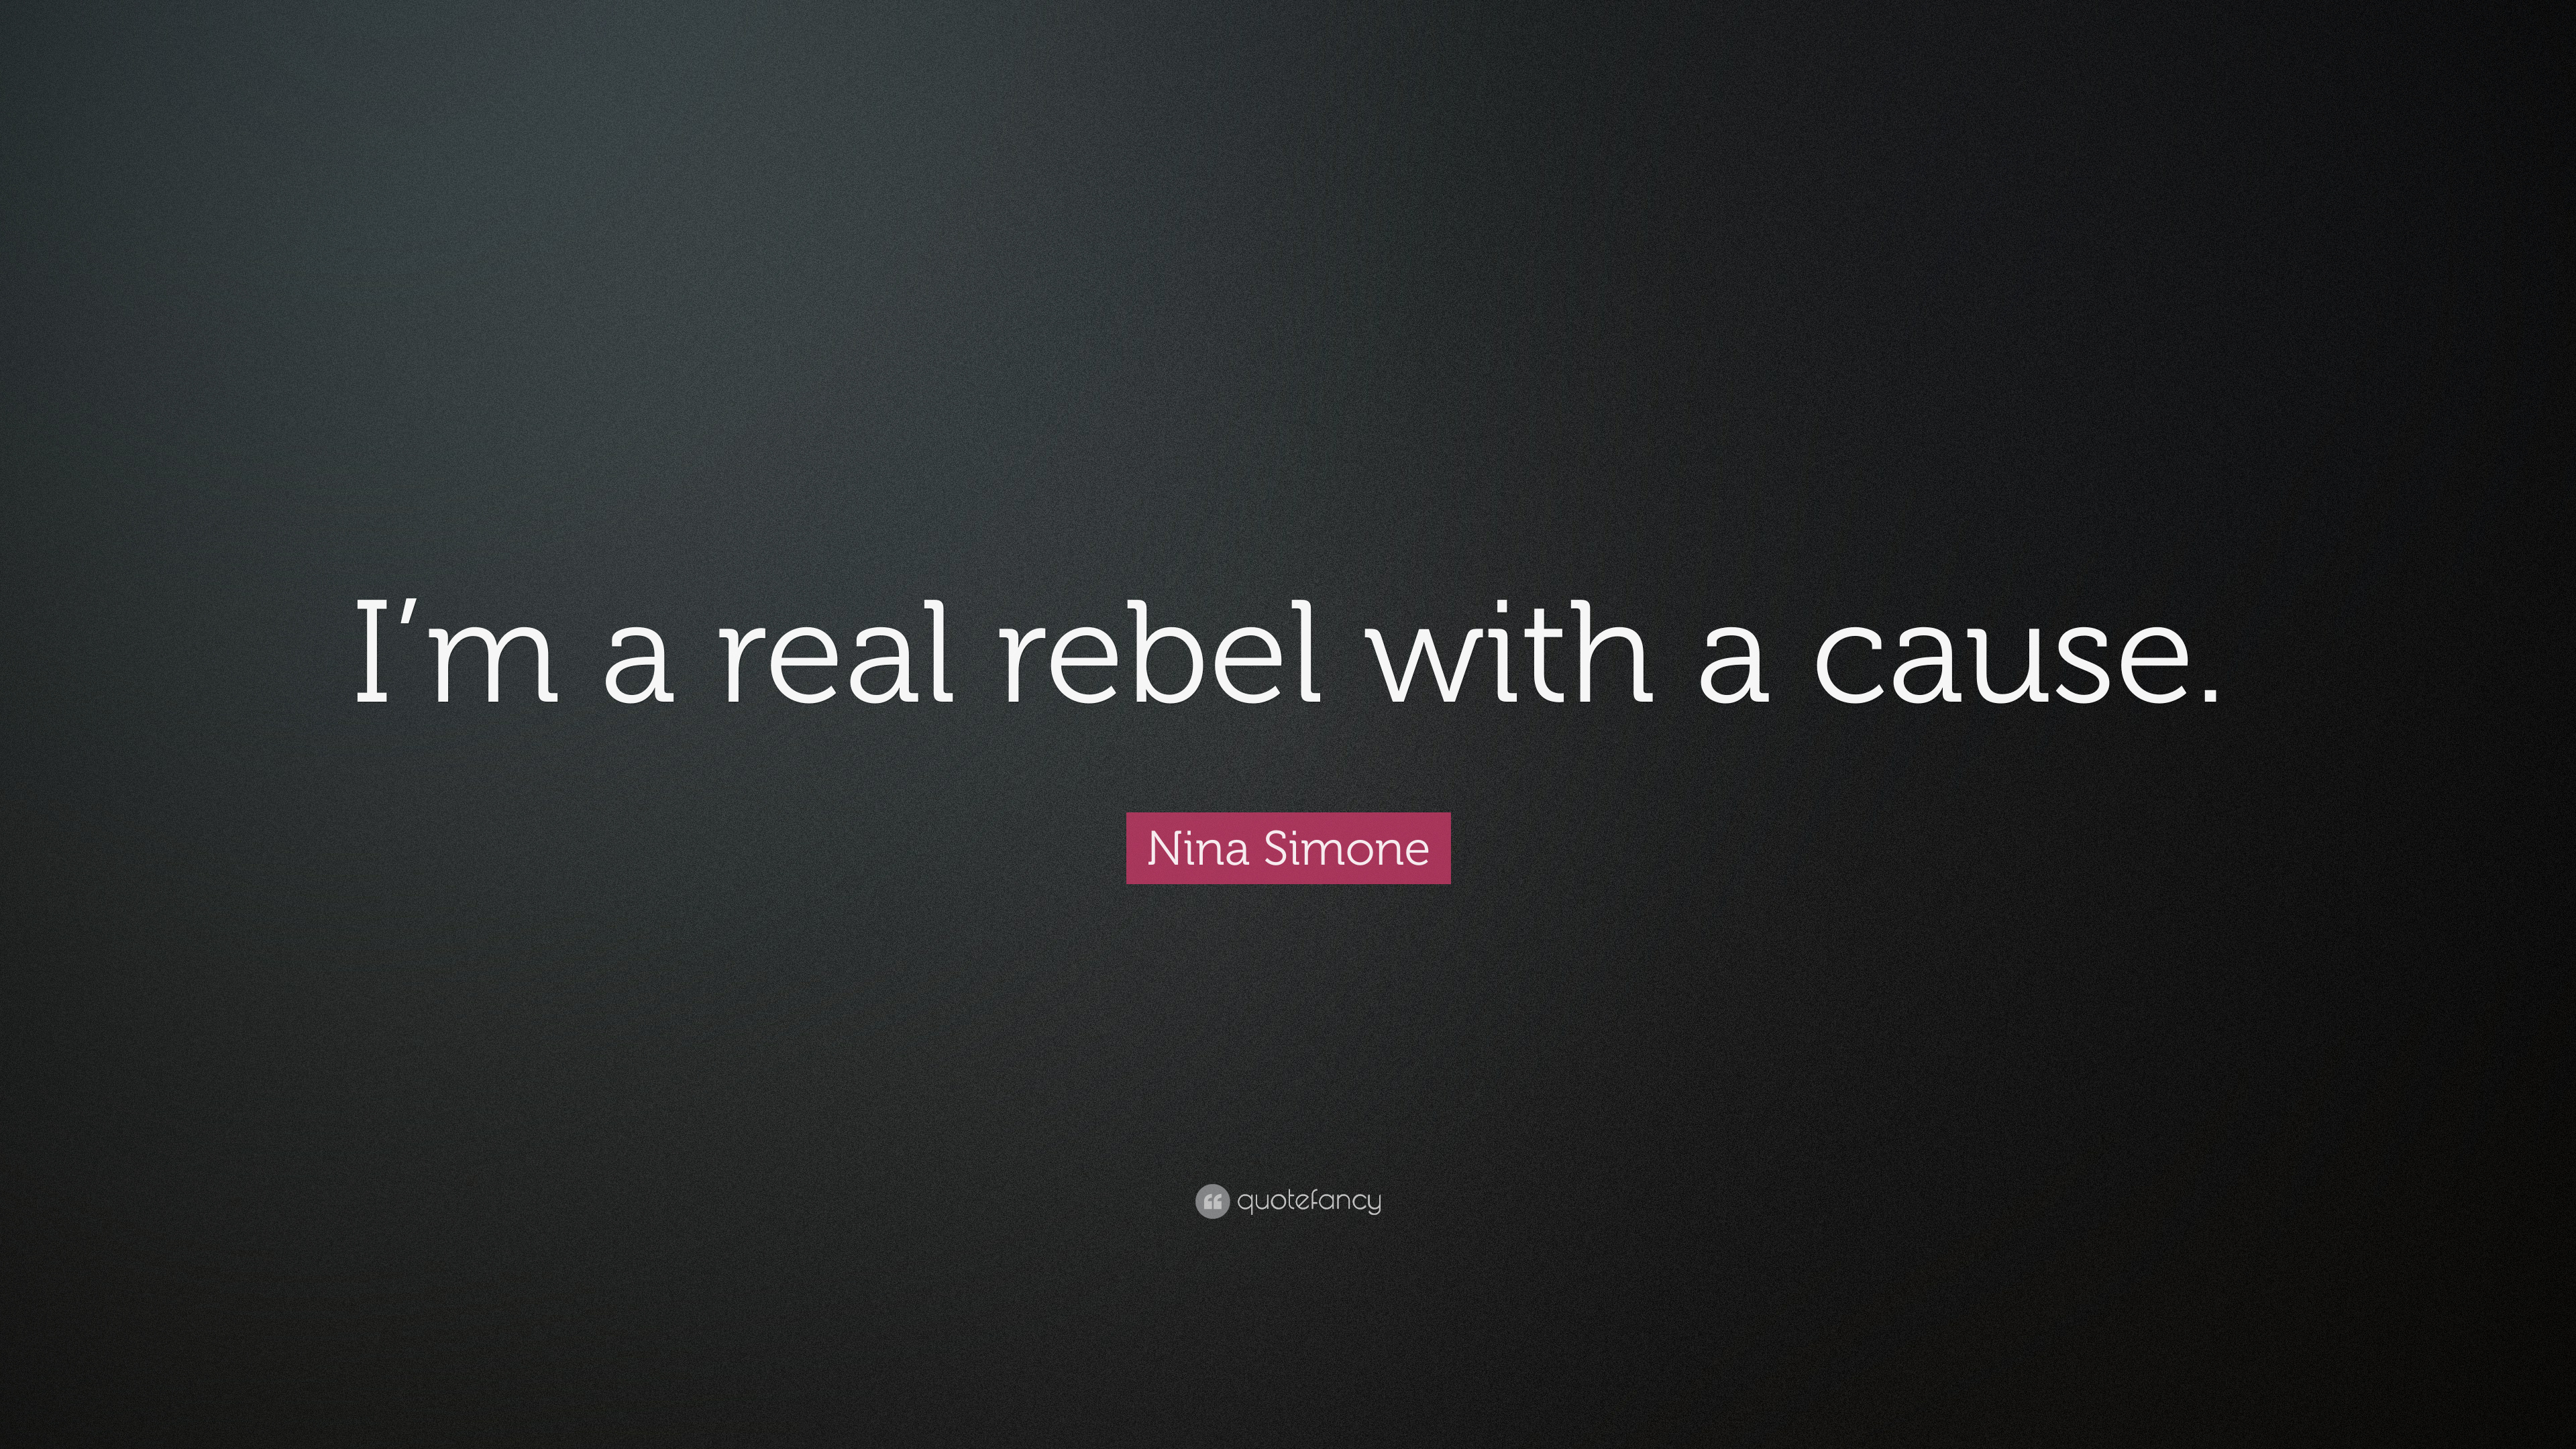 8 Quotes About Nina Simone